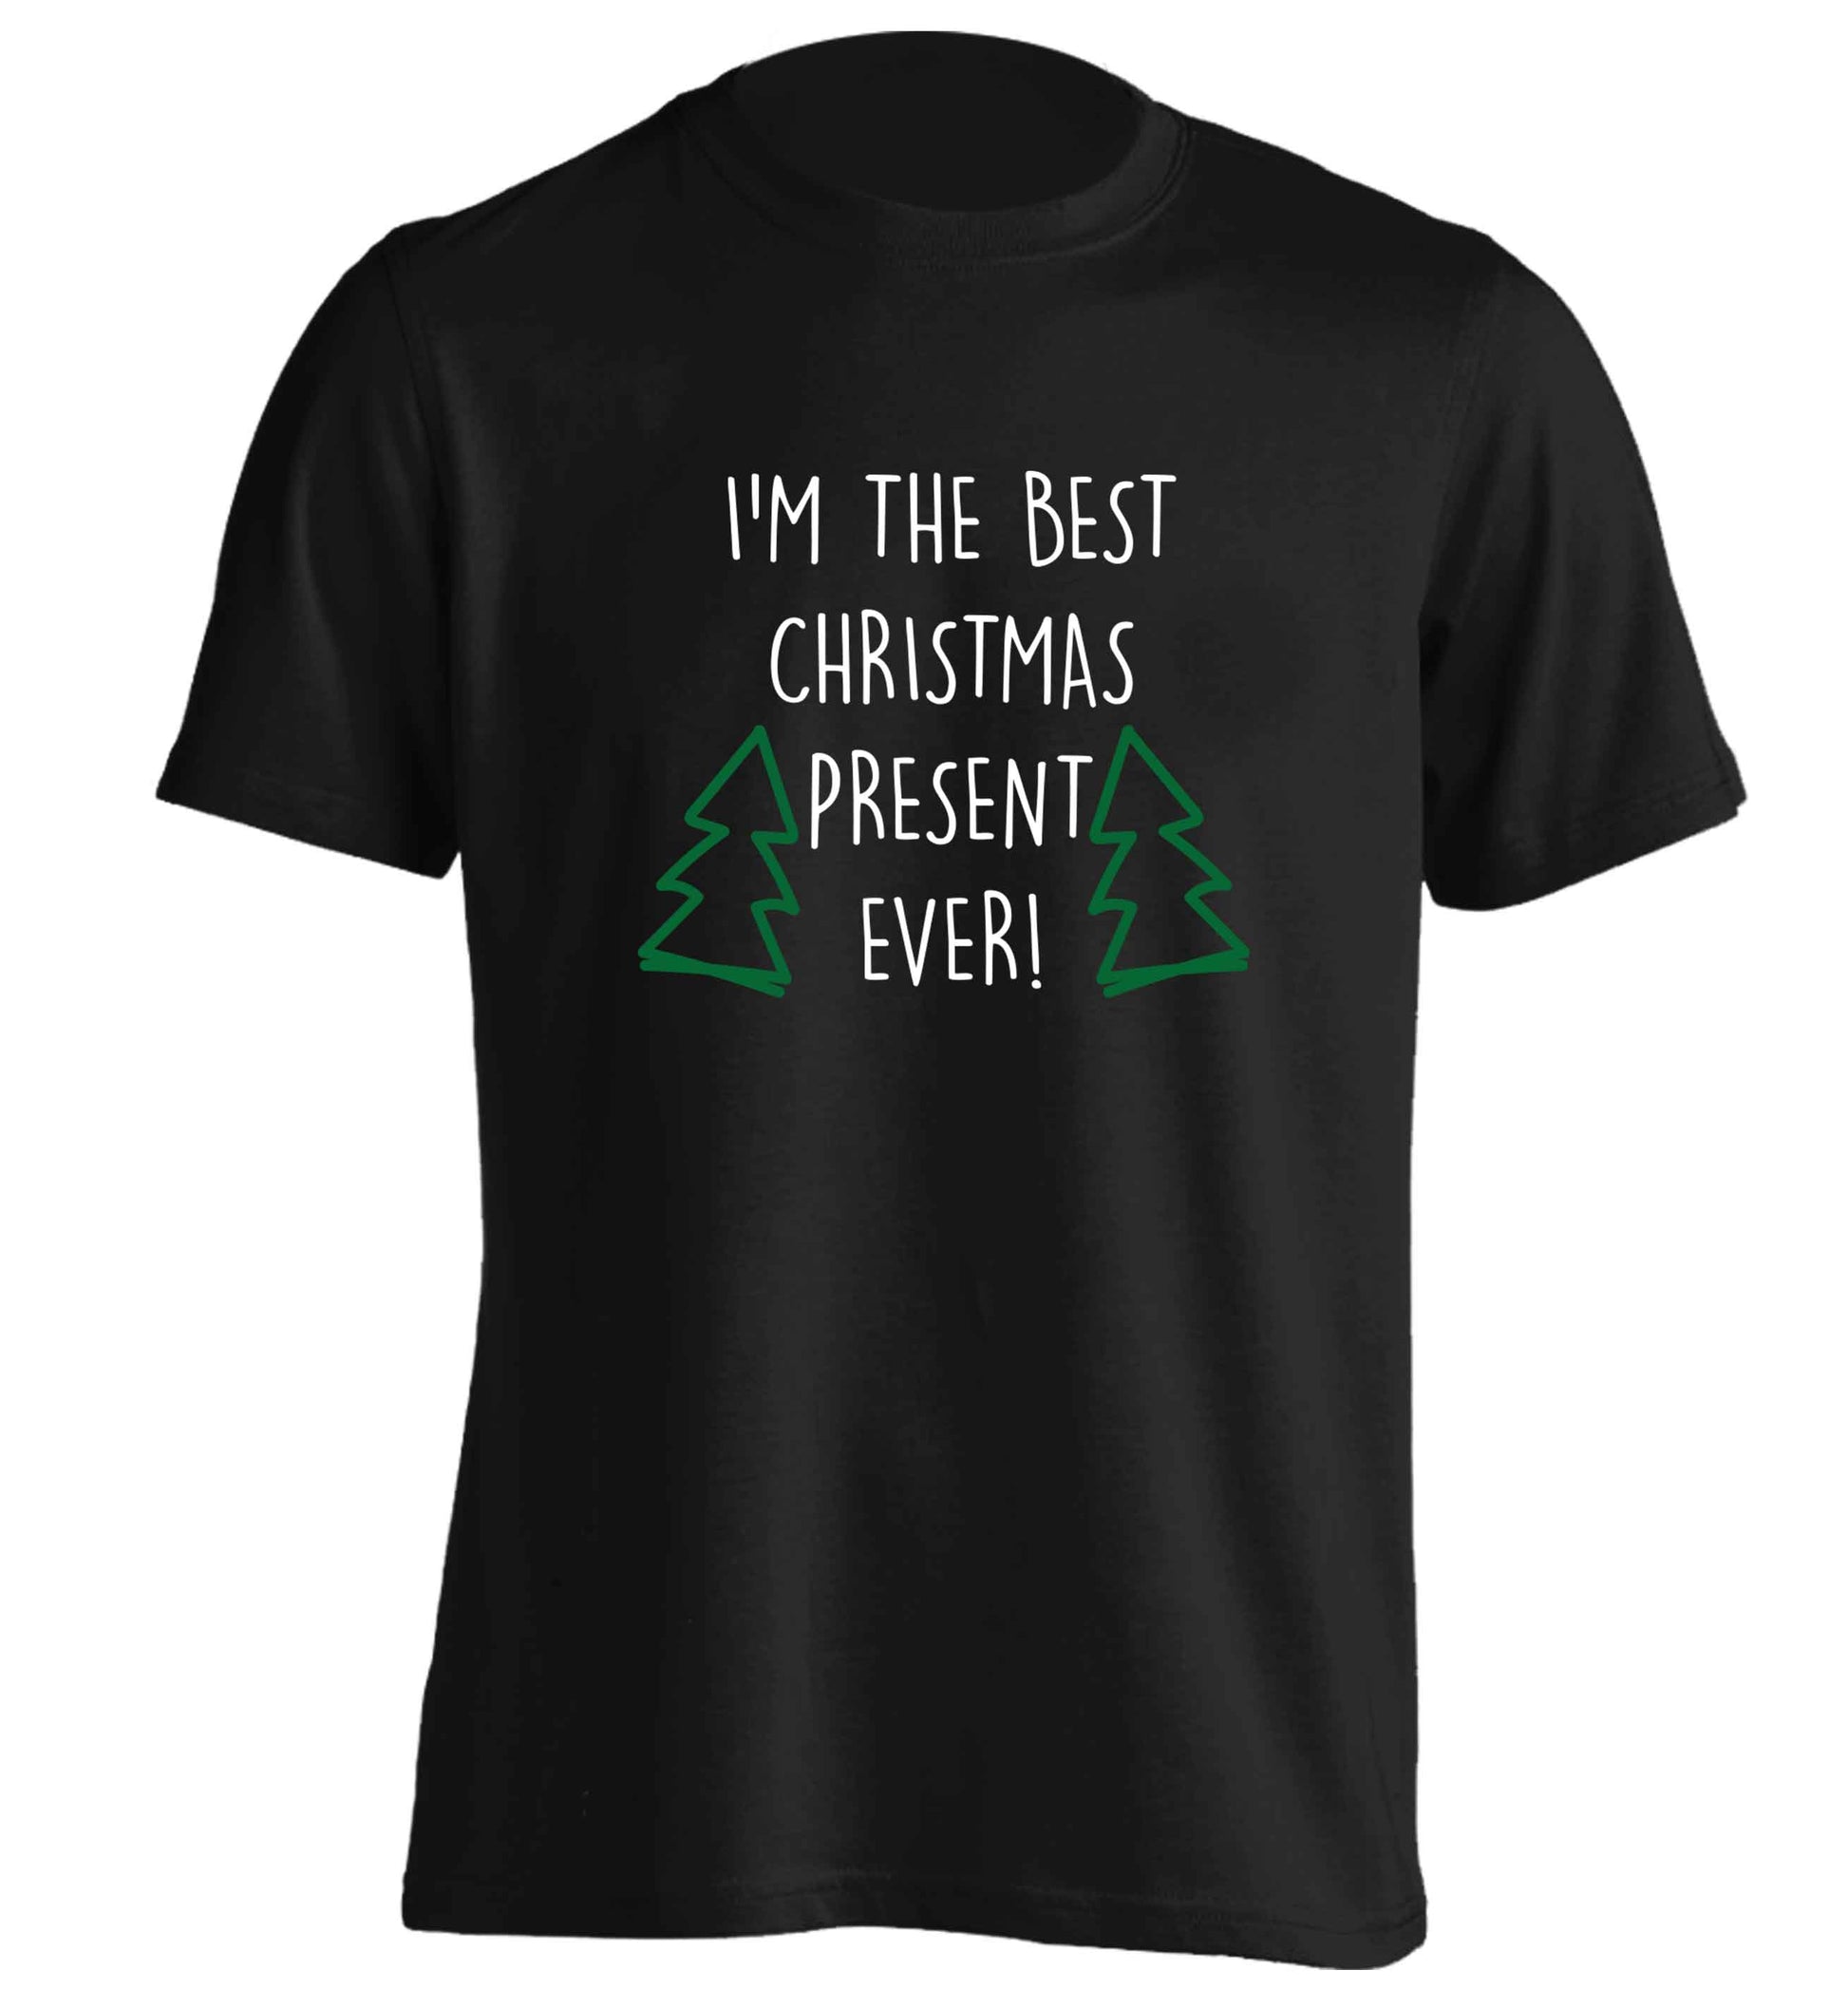 I'm the best Christmas present ever adults unisex black Tshirt 2XL